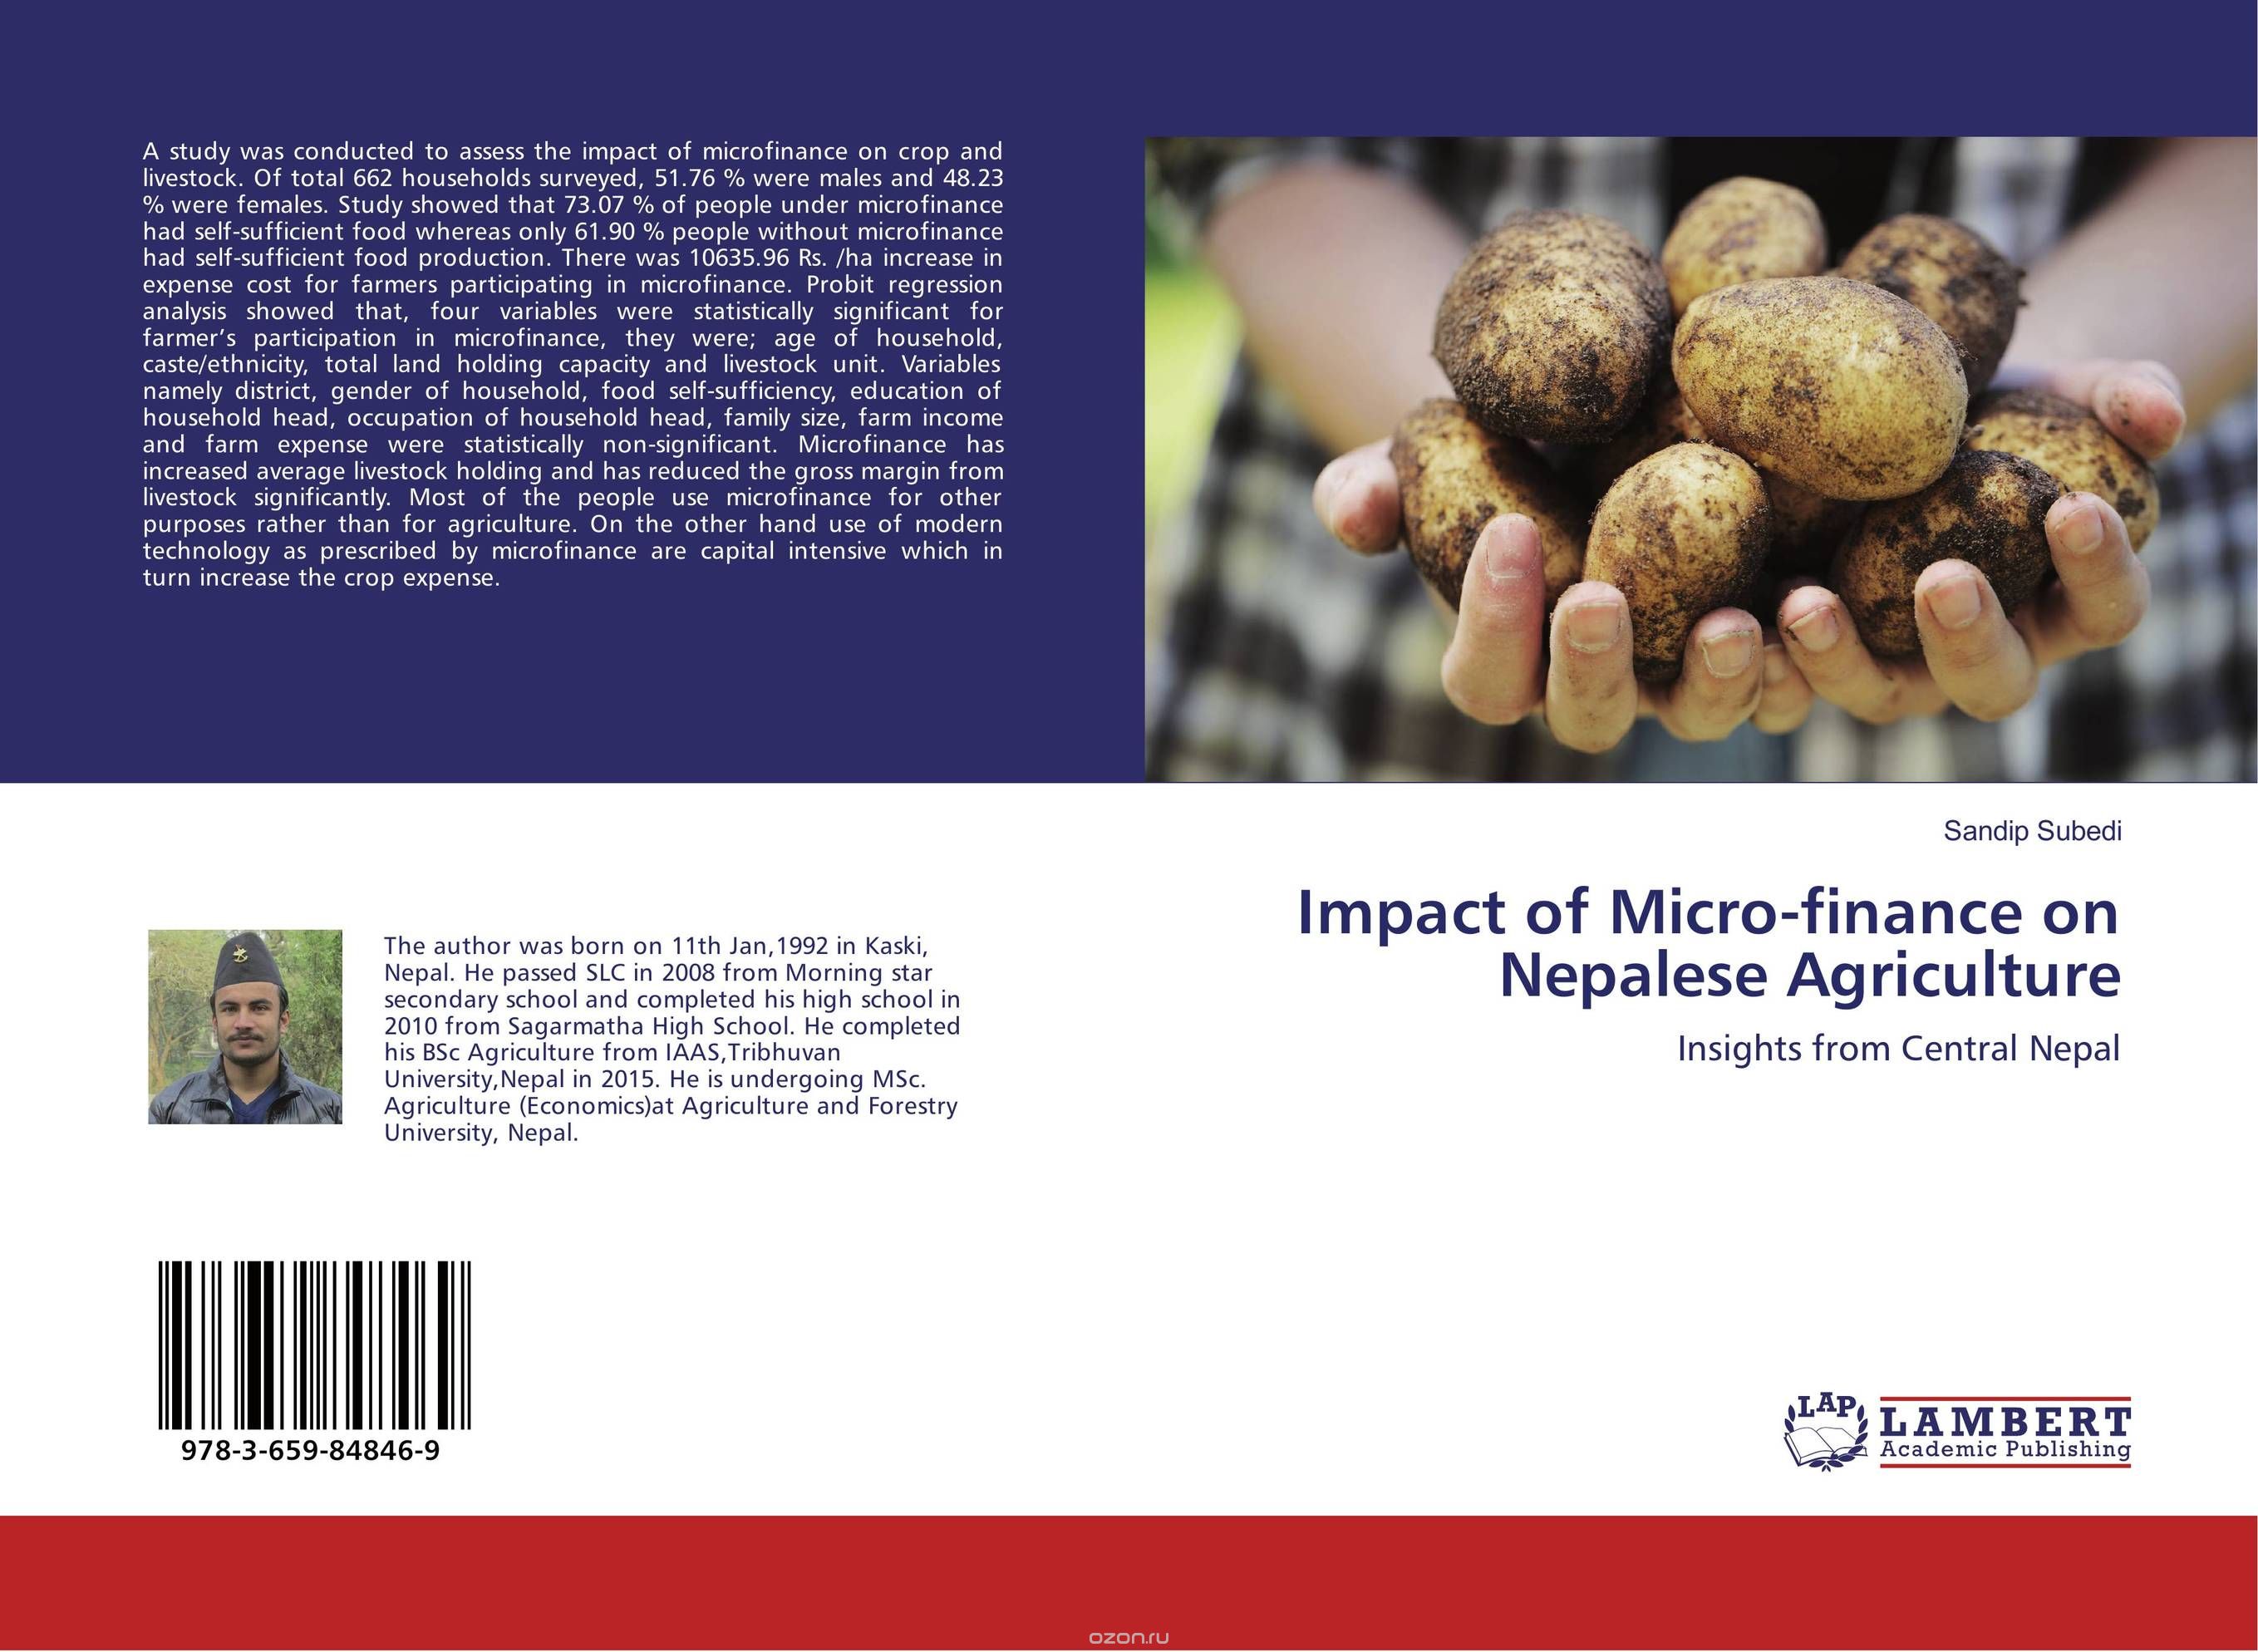 Скачать книгу "Impact of Micro-finance on Nepalese Agriculture"